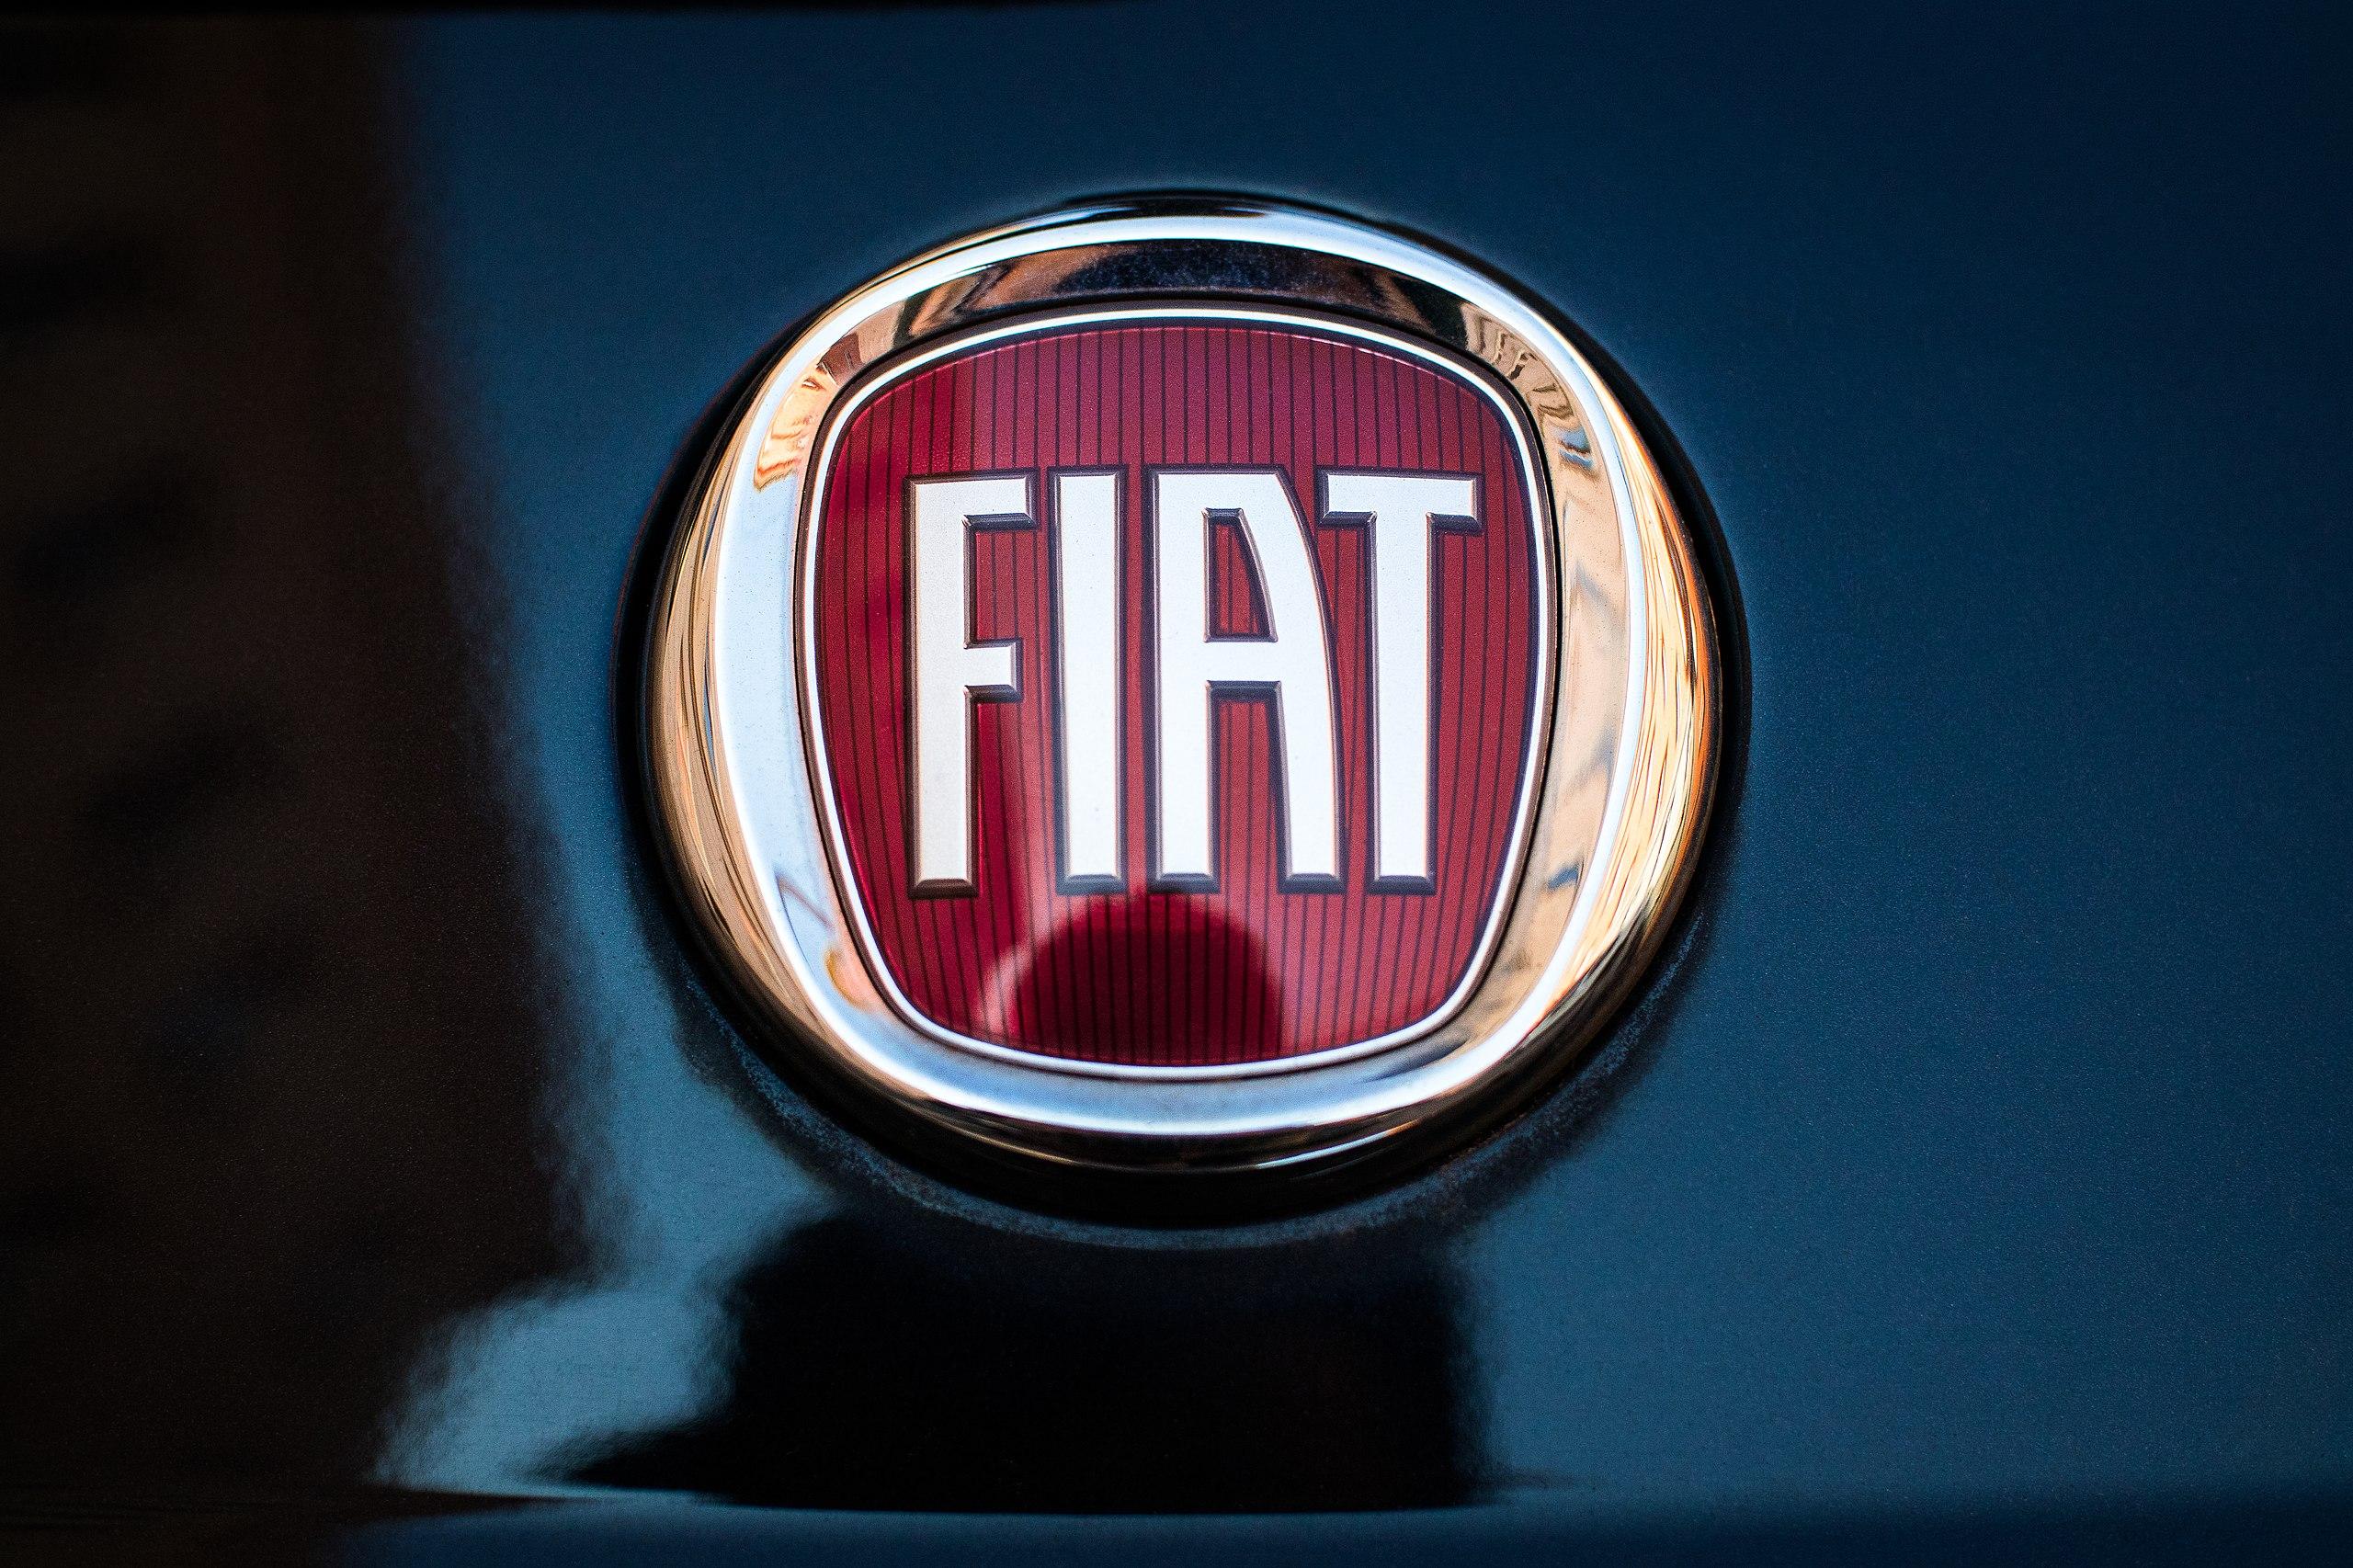 File Fiat Badge On A Car Jpg Wikimedia Mons